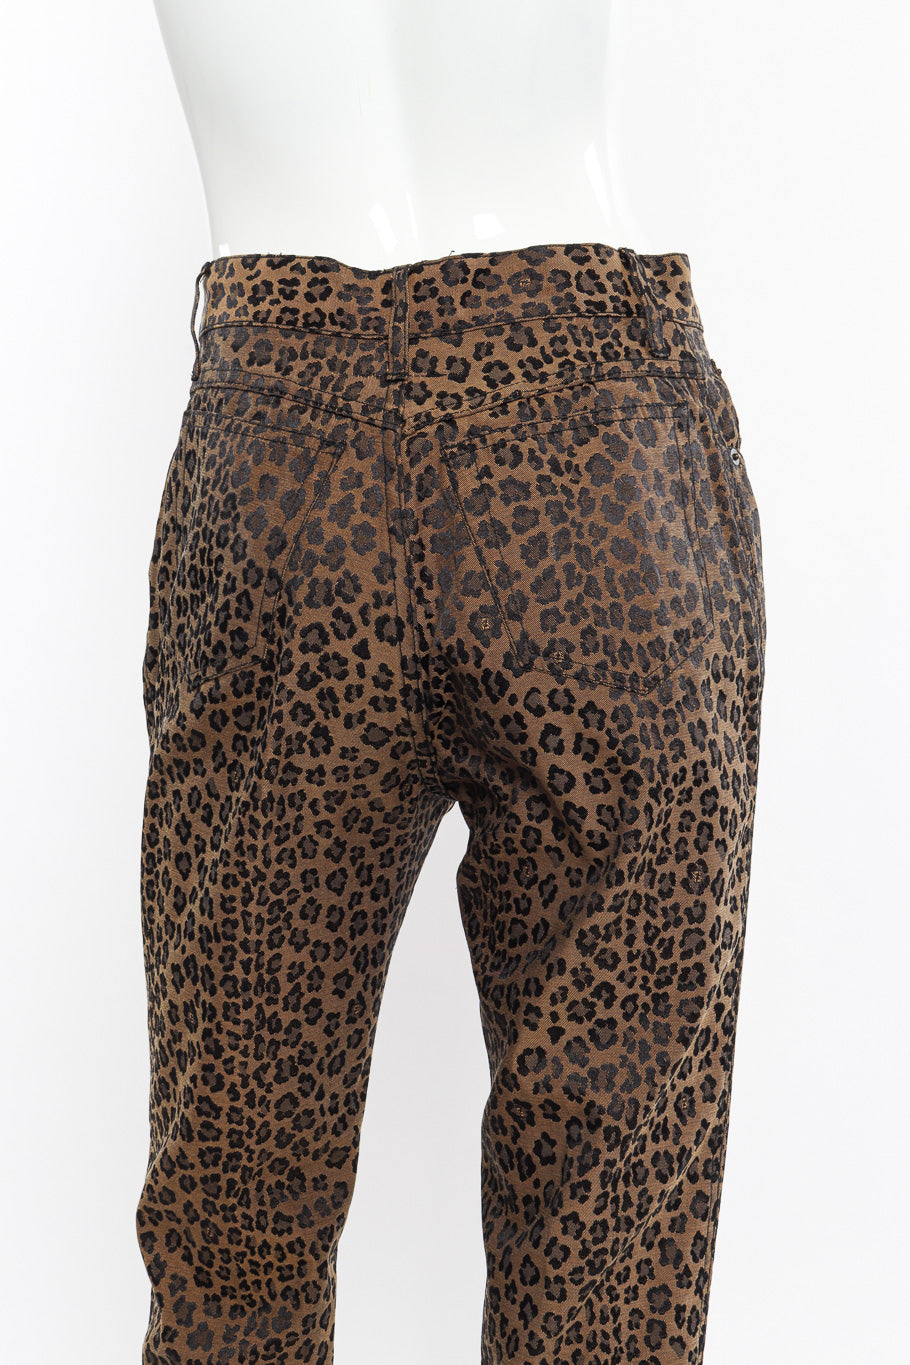 Twill Leopard Jean by Fendi on mannequin back close @recessla